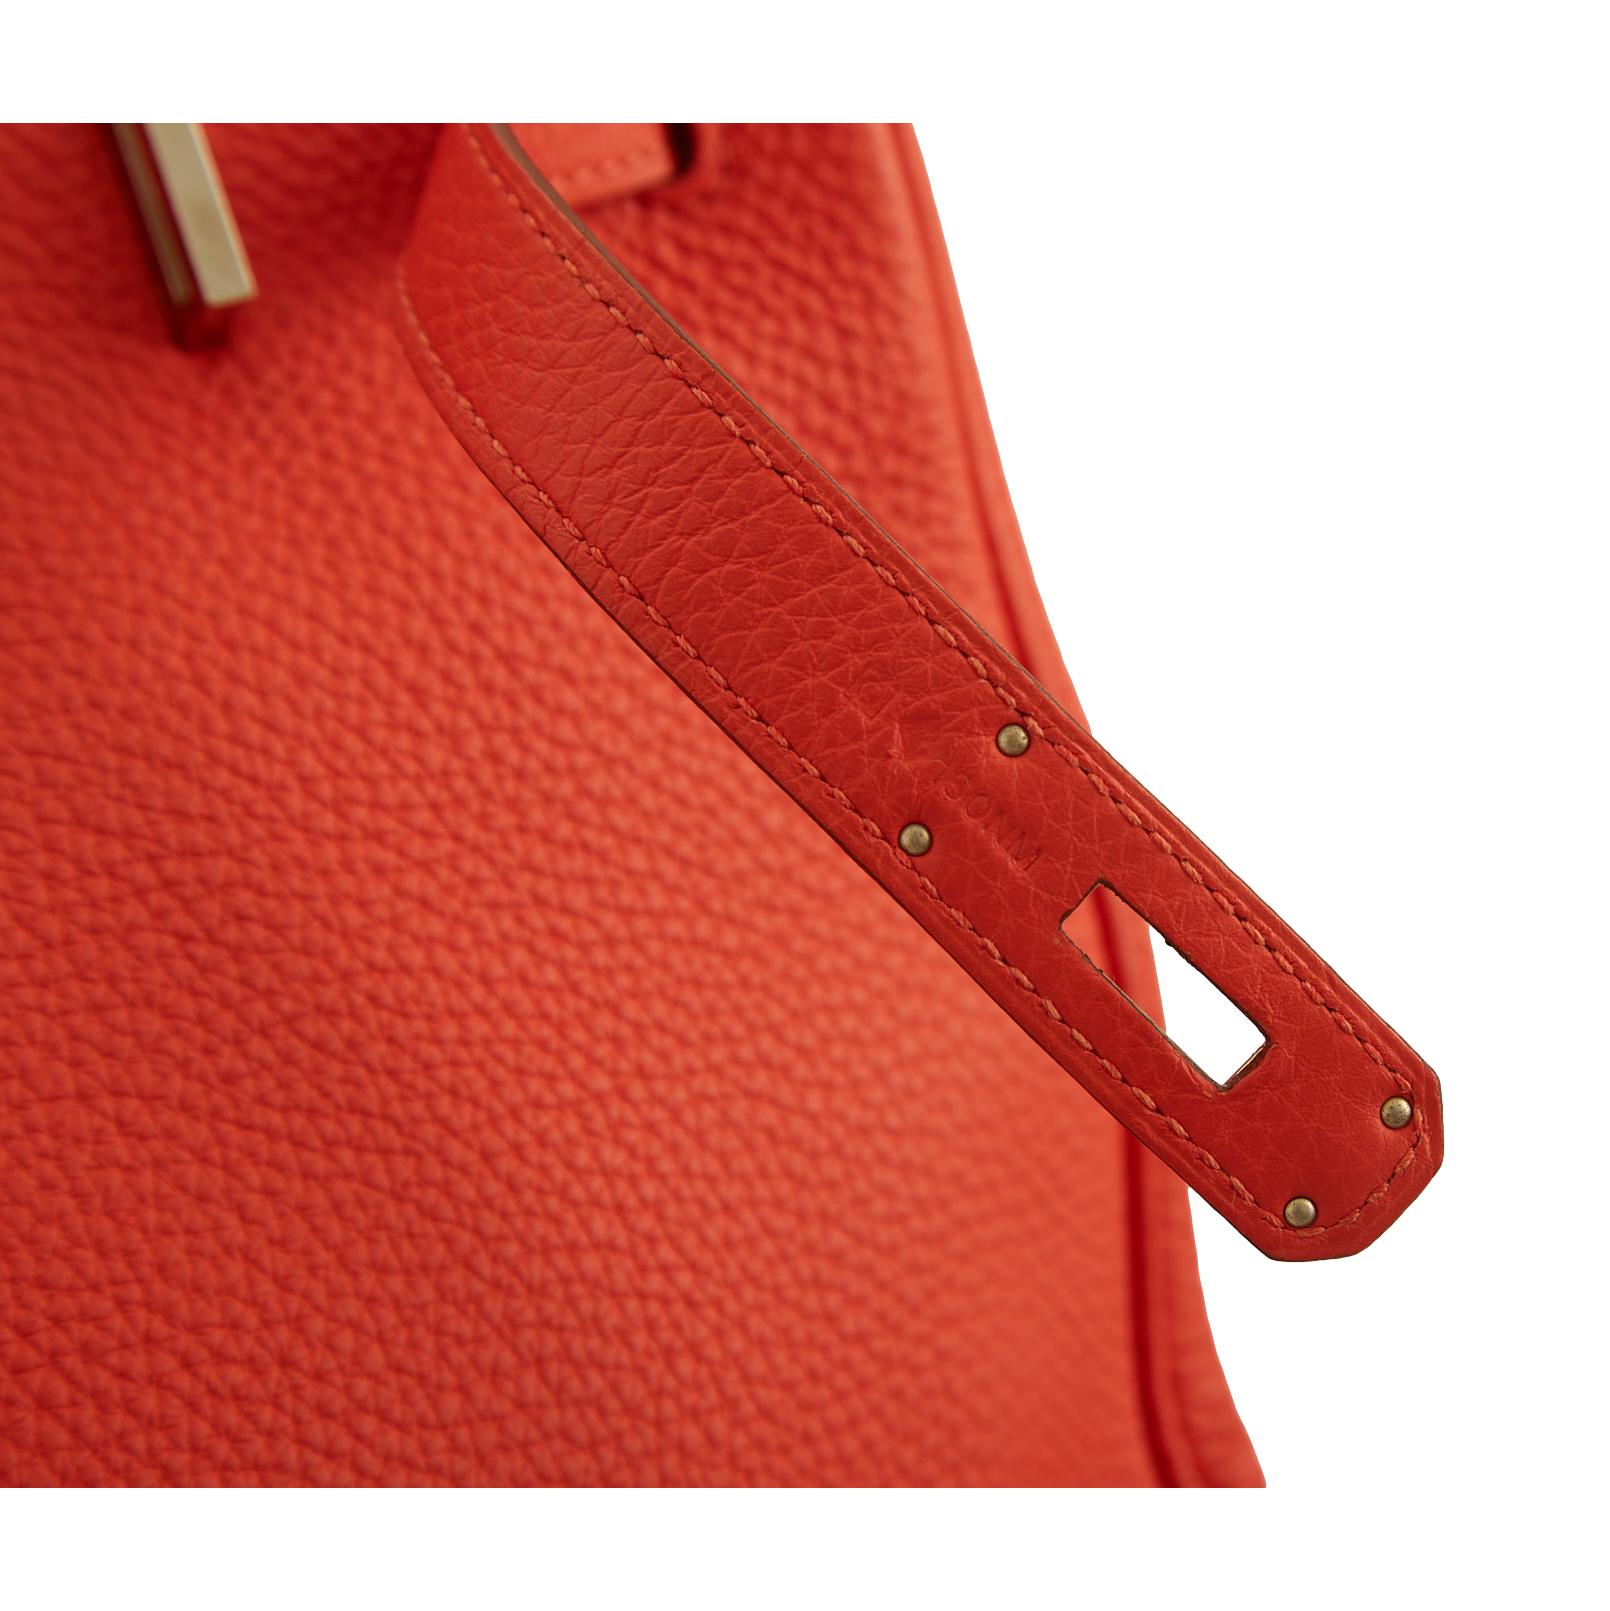 Red Capucine Hermes Togo 35 Birkin Bag